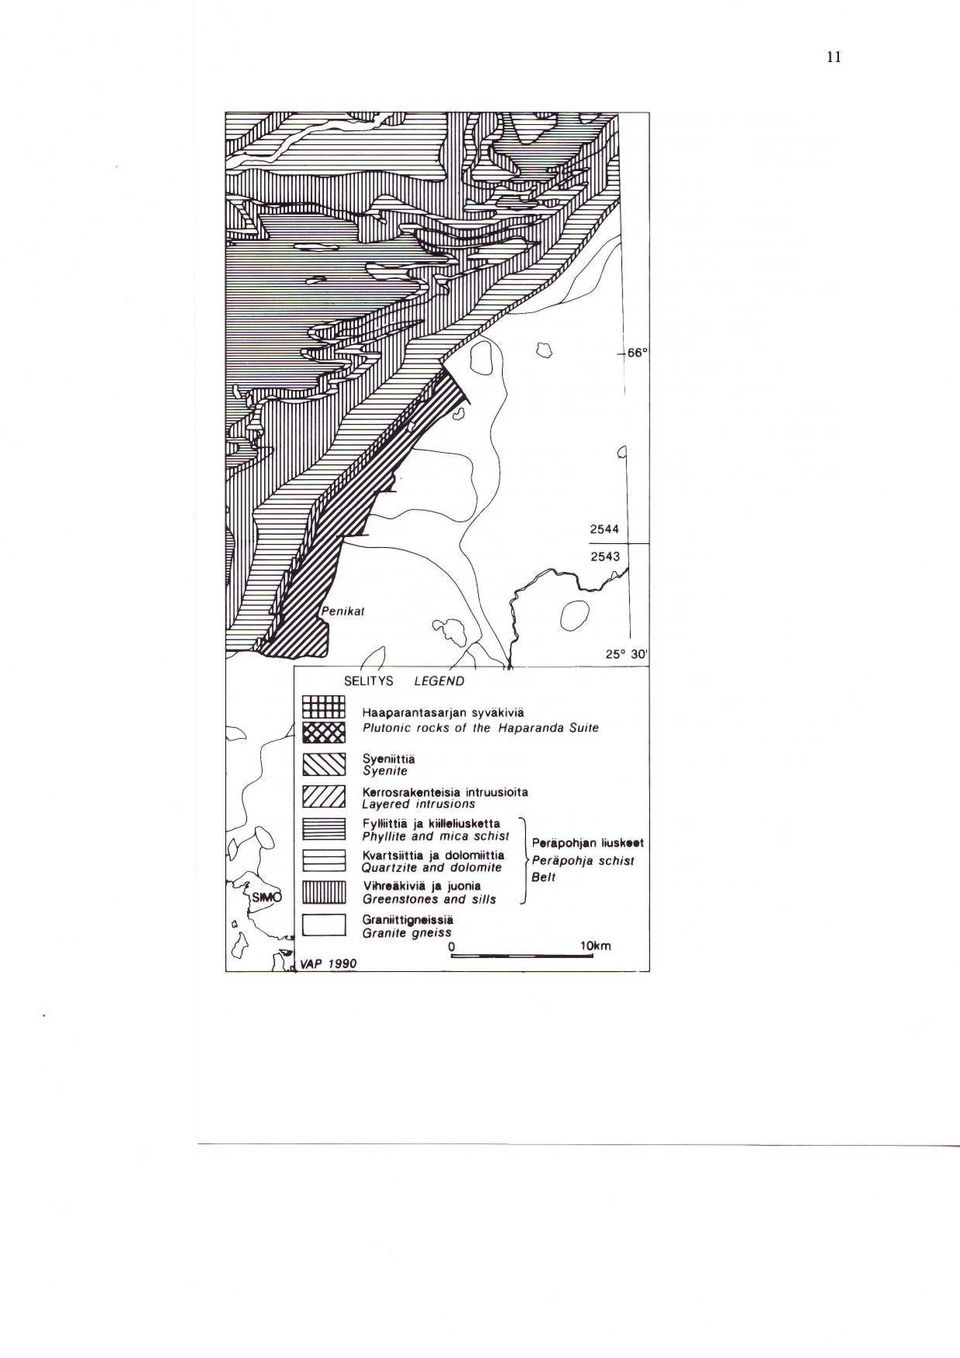 Phyllite and mica schist Kvartsiittia ja dolomiittia Quartzite and dolomite Vihreakivia ja